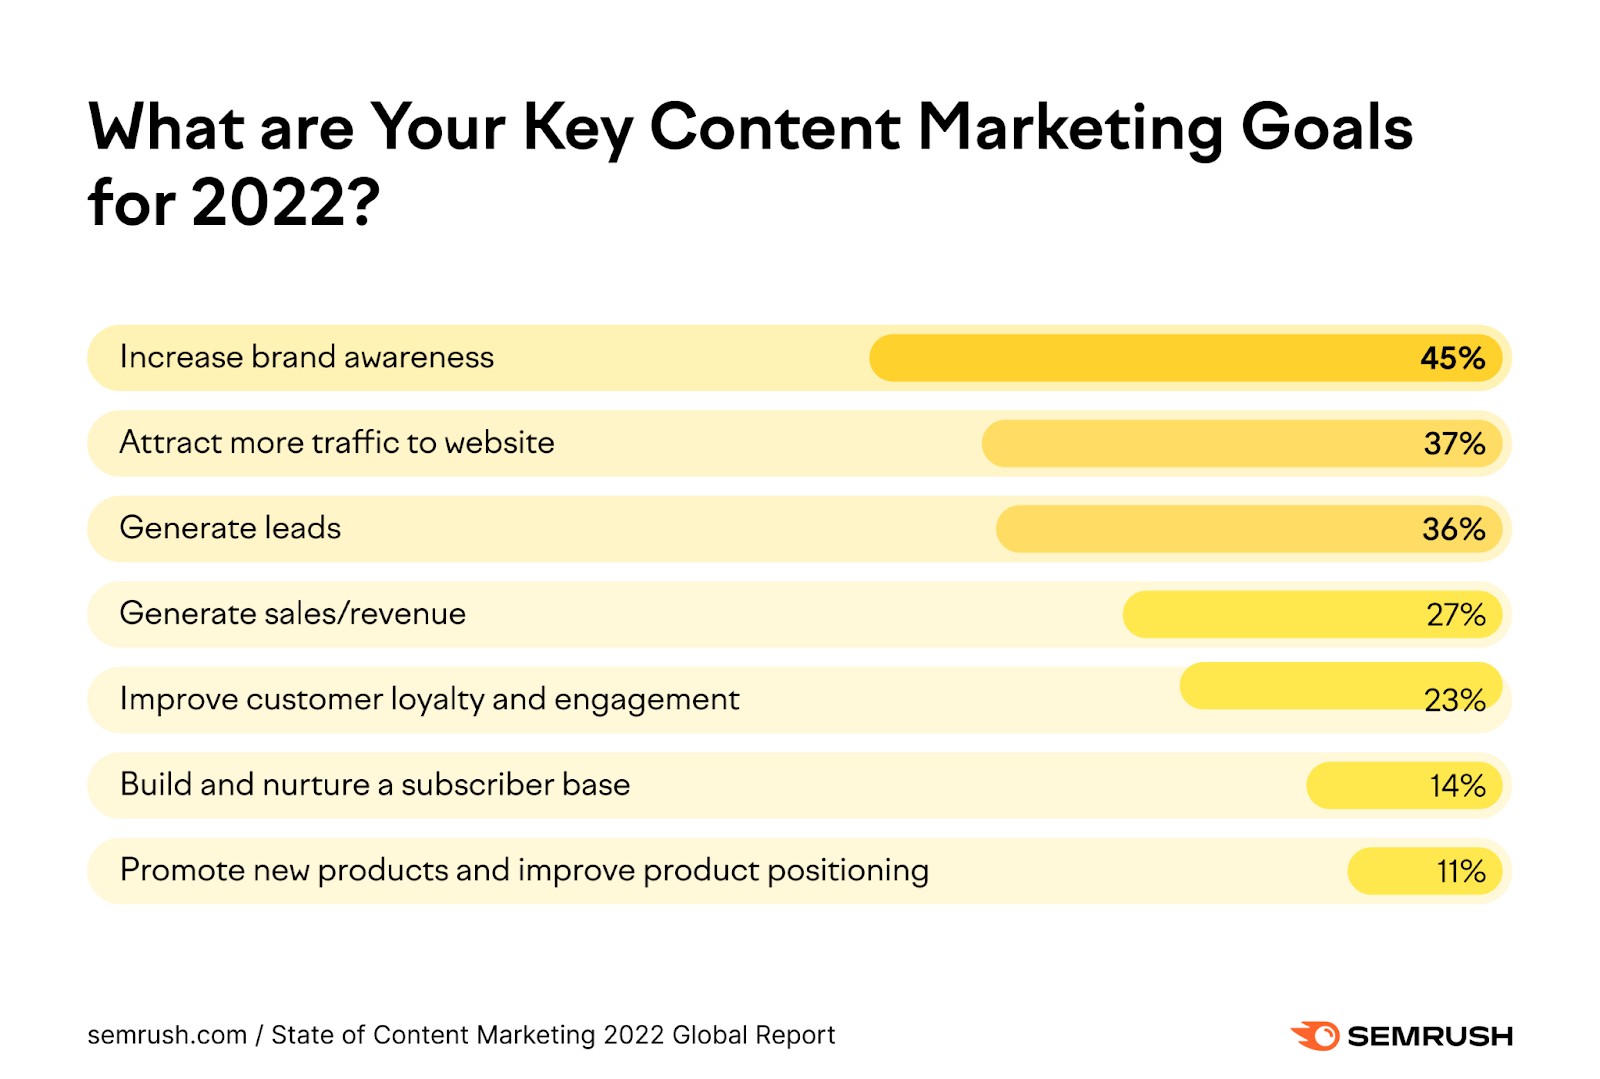 Semrush Content Marketing Poll